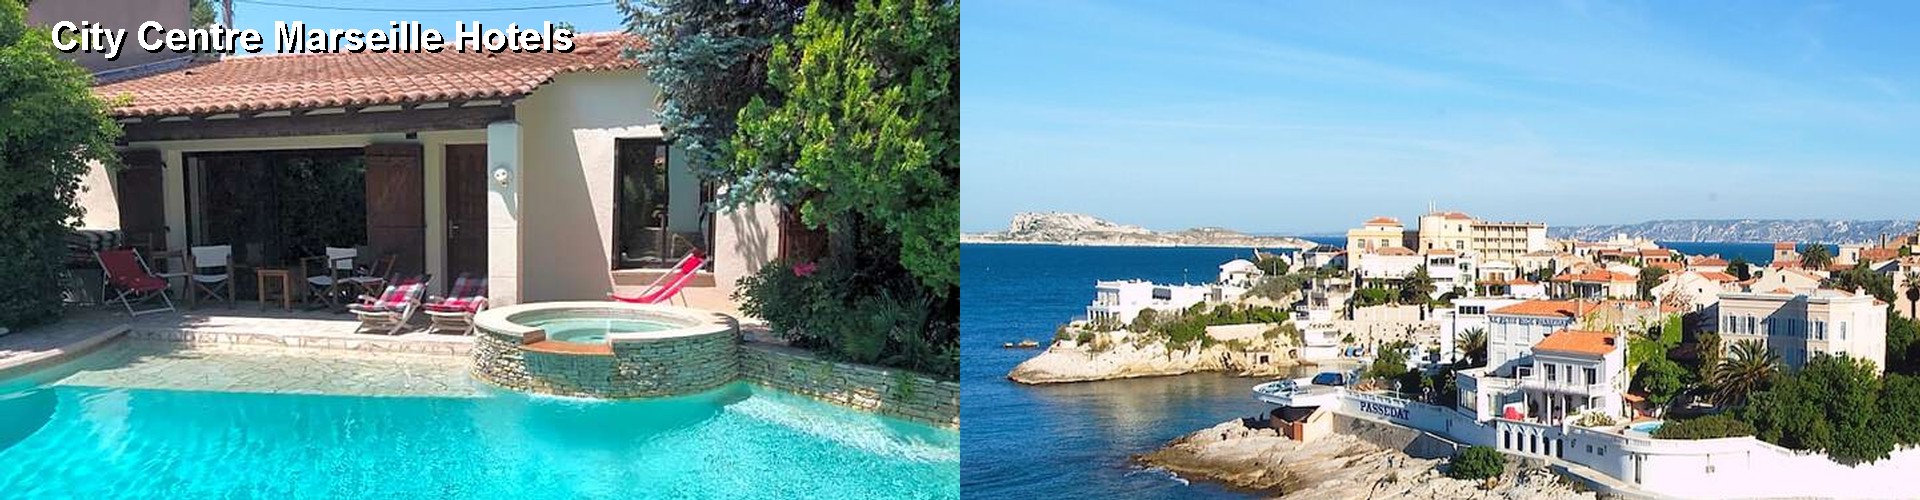 5 Best Hotels near City Centre Marseille